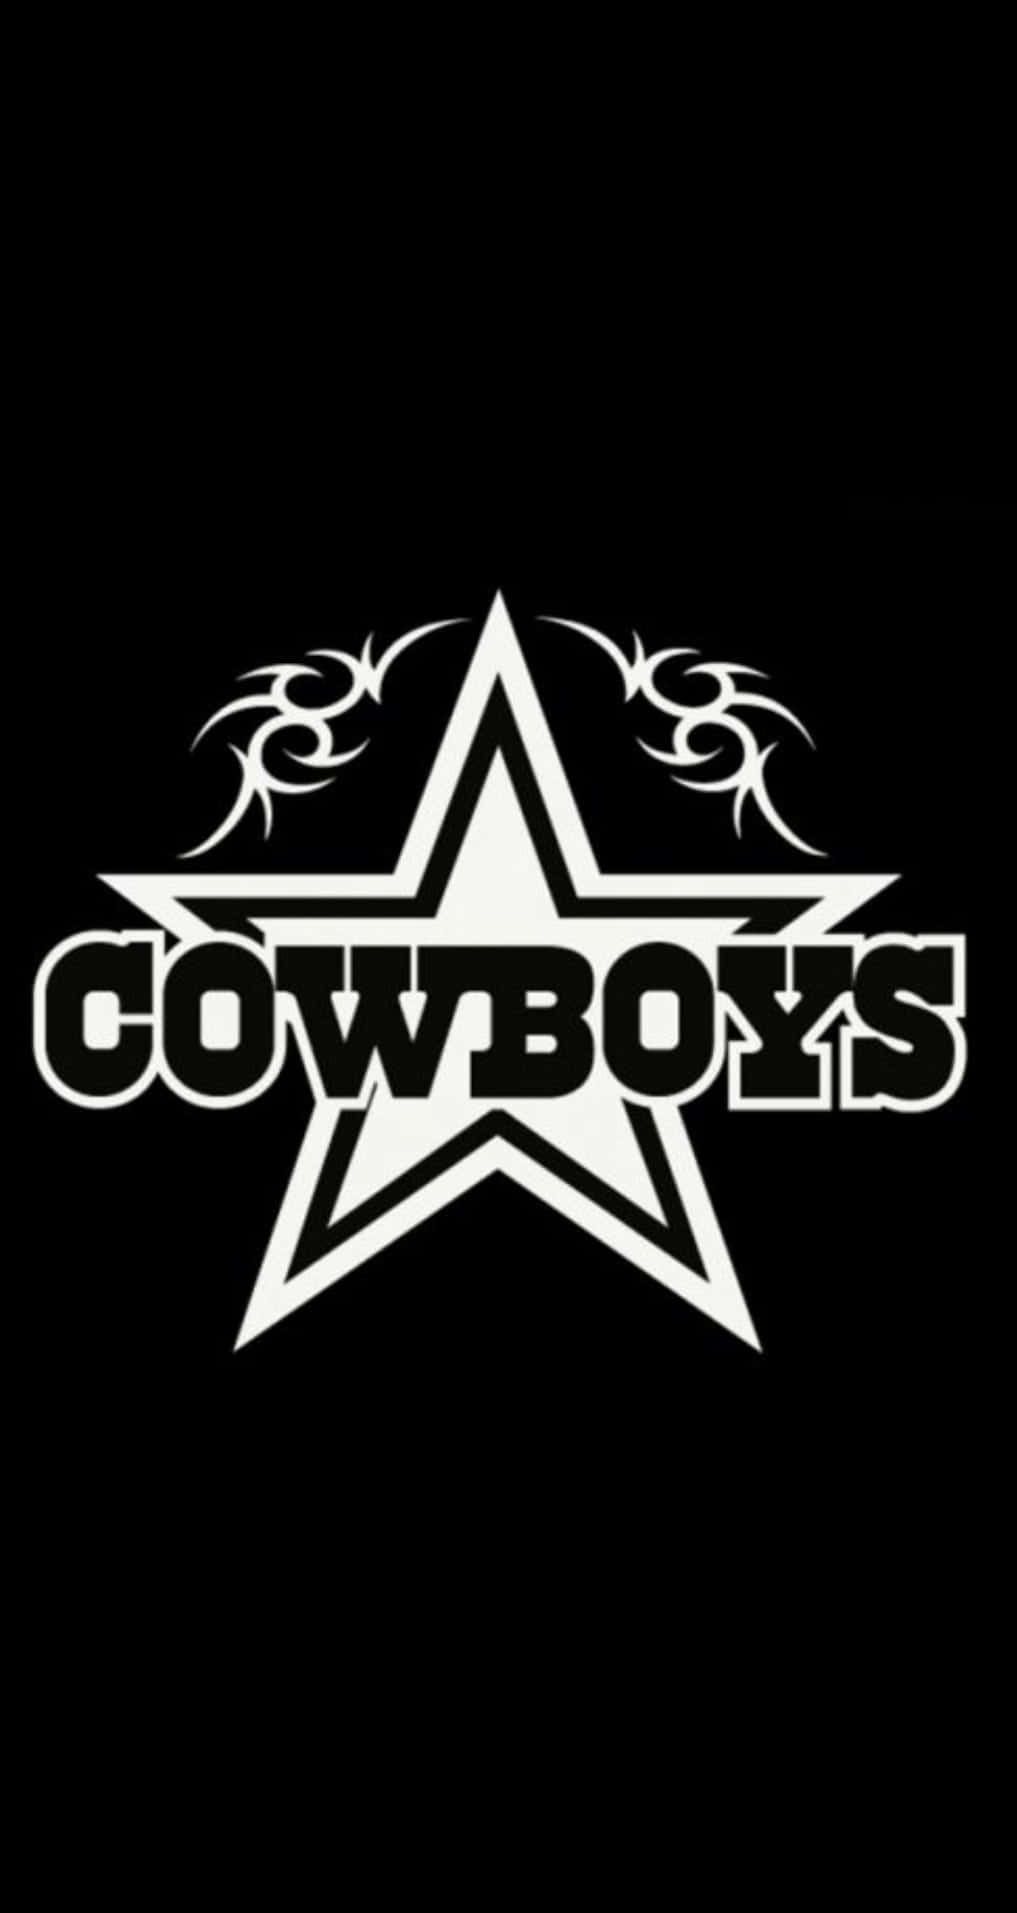 Cowboys'erbe: Eine Rodeo-tradition